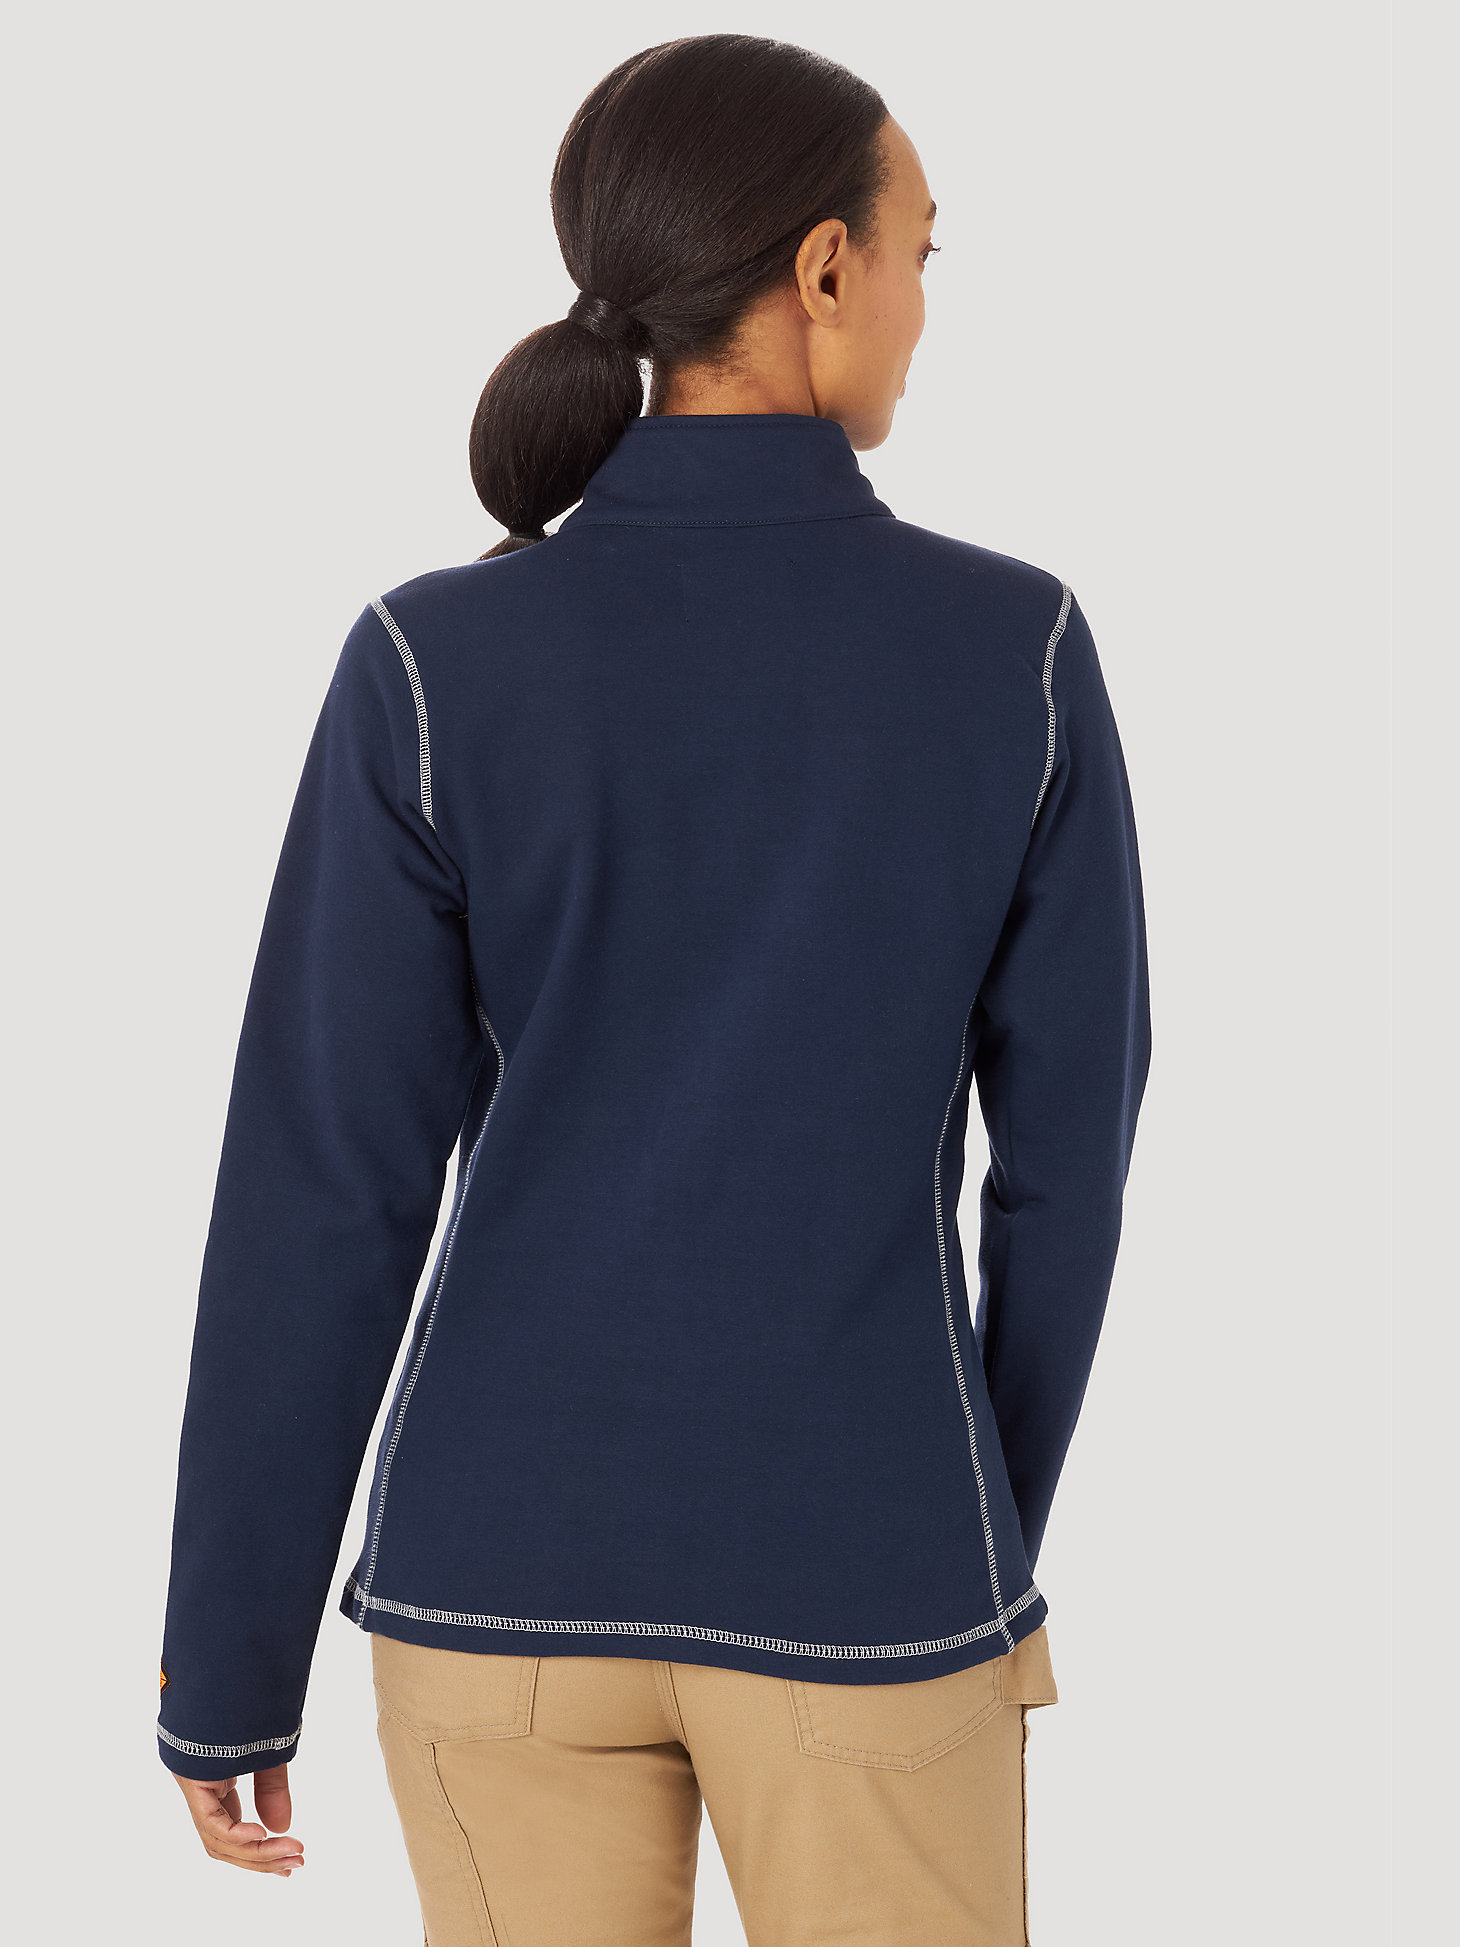 Women's Wrangler® Flame Resistant Long Sleeve Quarter-Zip Pullover in Navy alternative view 1